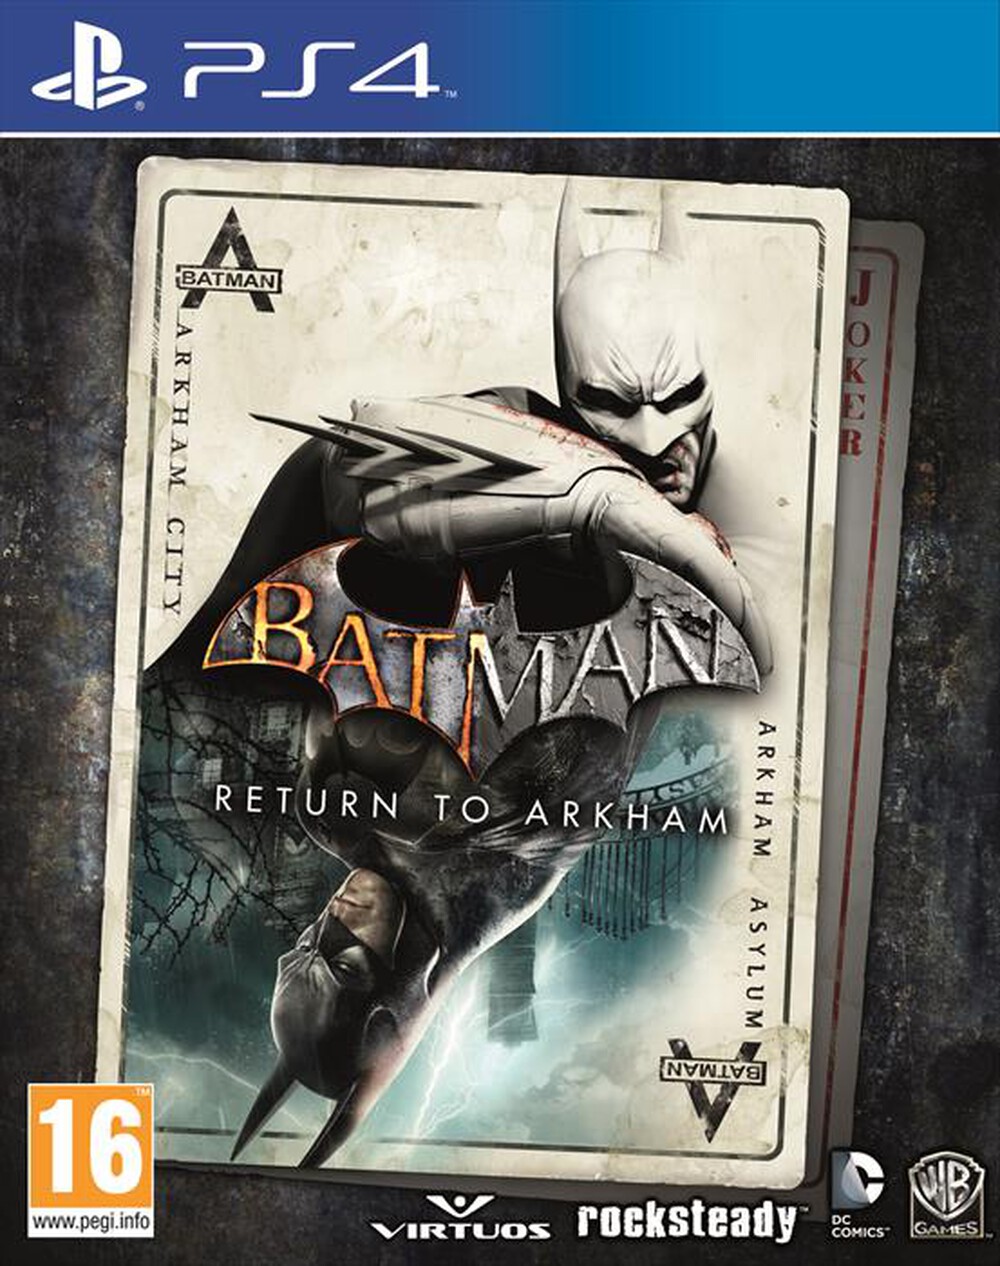 "WARNER GAMES - Batman: Return to Arkham PS4"